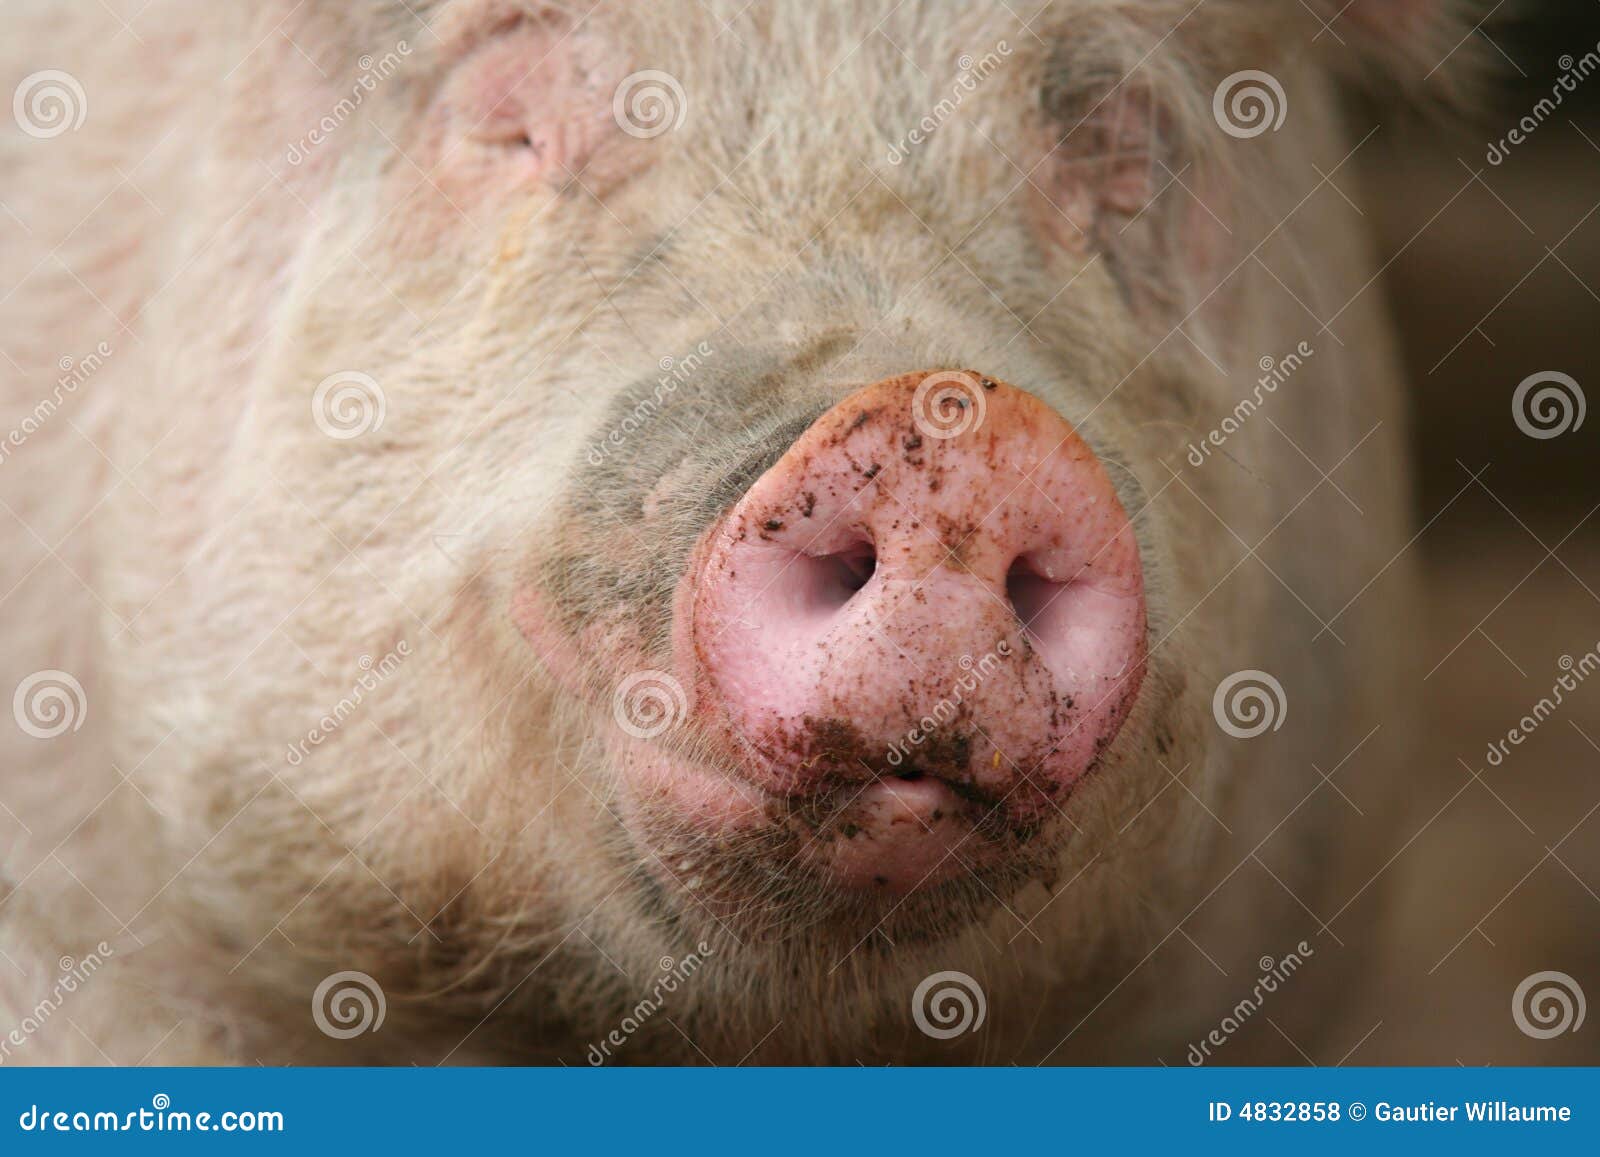 snout of a pig